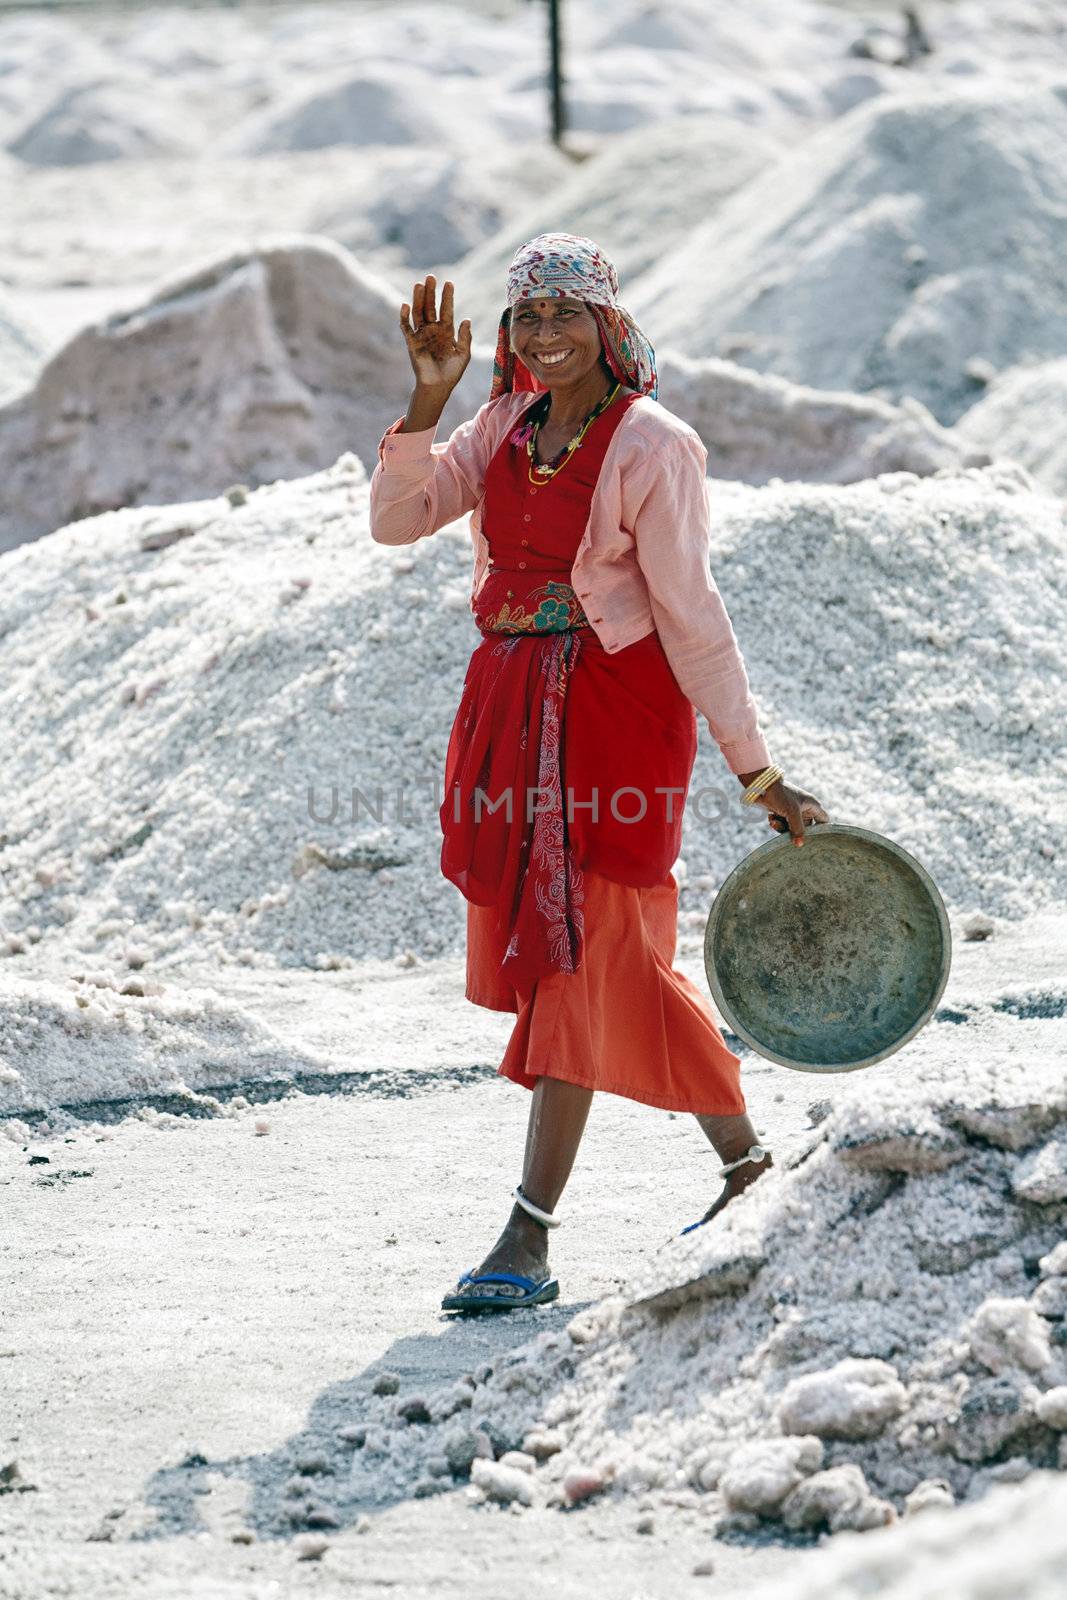 Salt works, Sambhar salt lake, Rajasthan, India by vladimir_sklyarov